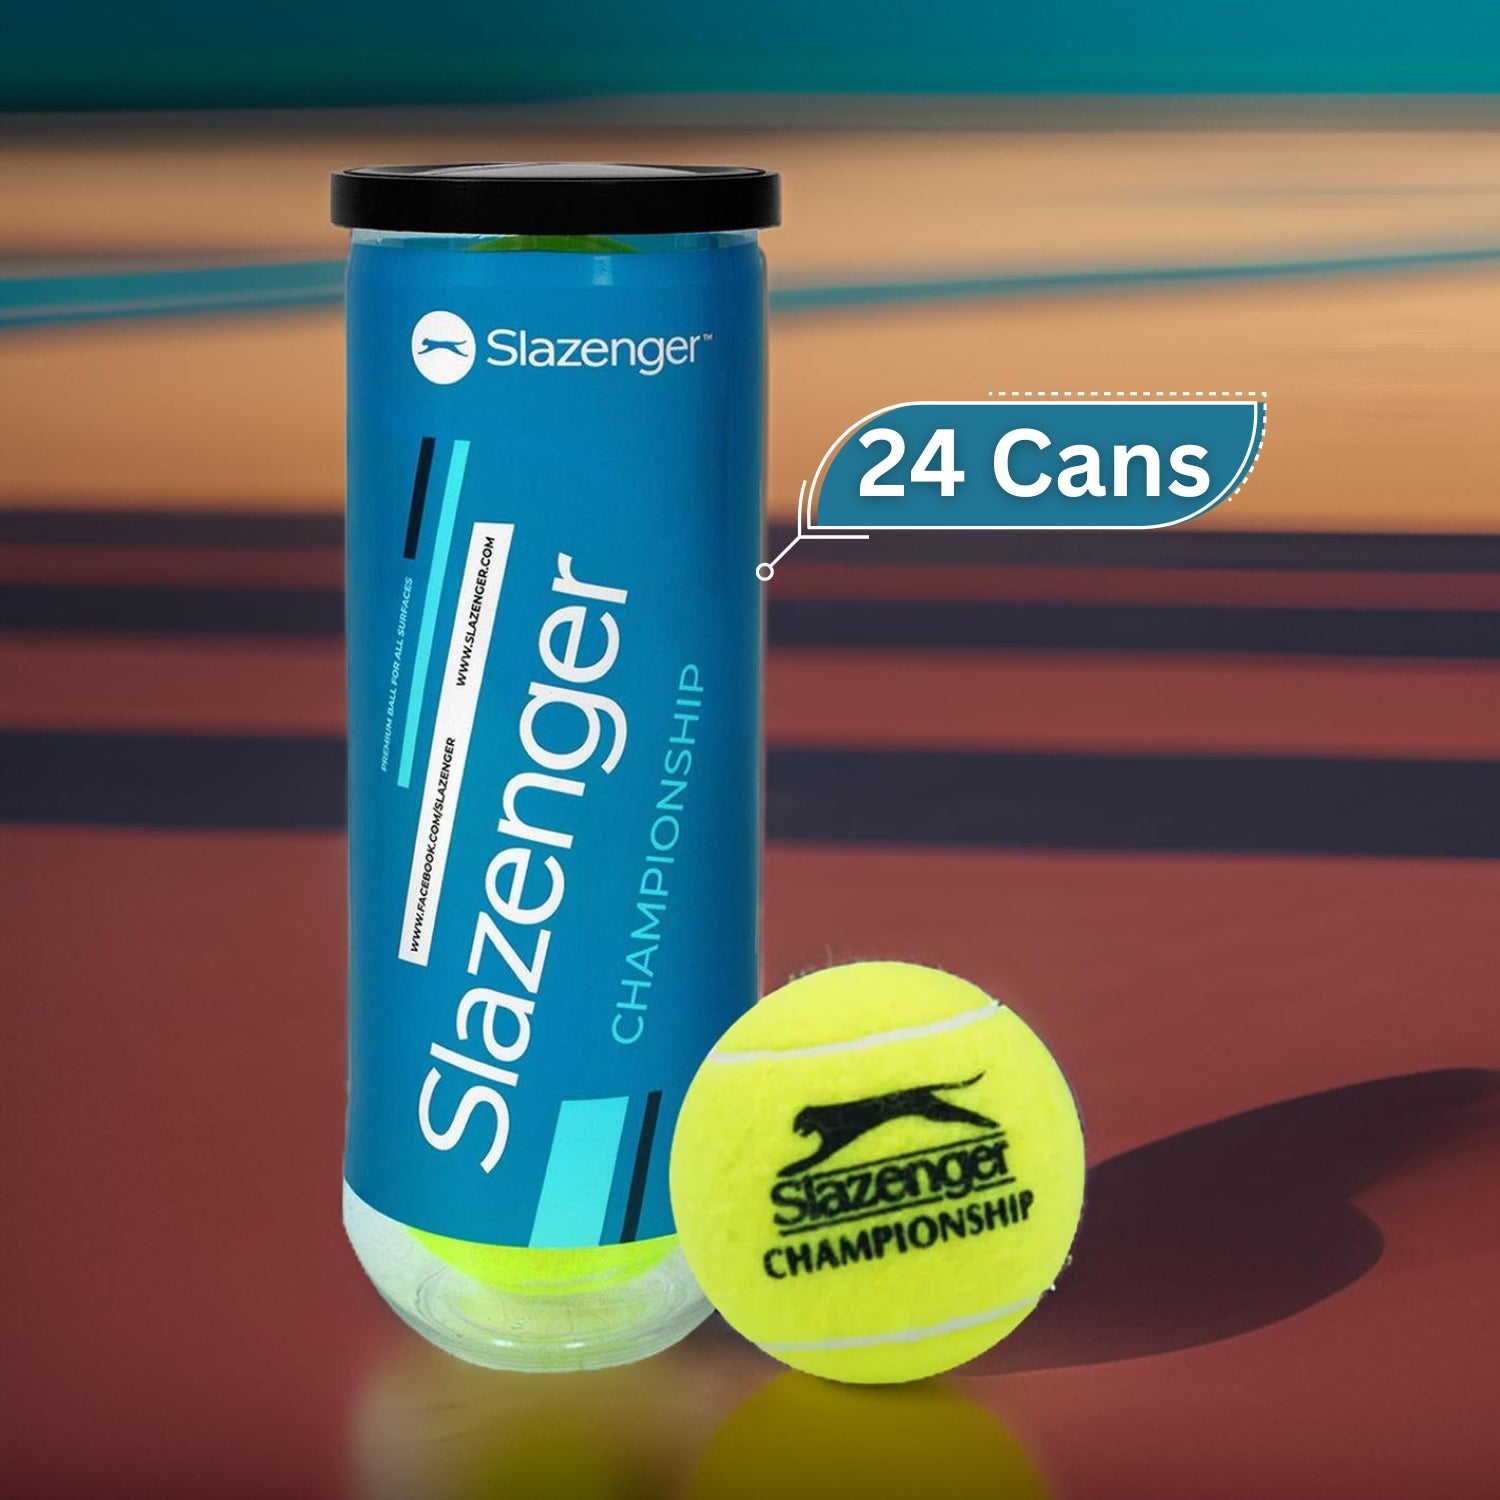 Slazenger Championship All Surface Tennis Balls Carton (24 Cans) - Best Price online Prokicksports.com